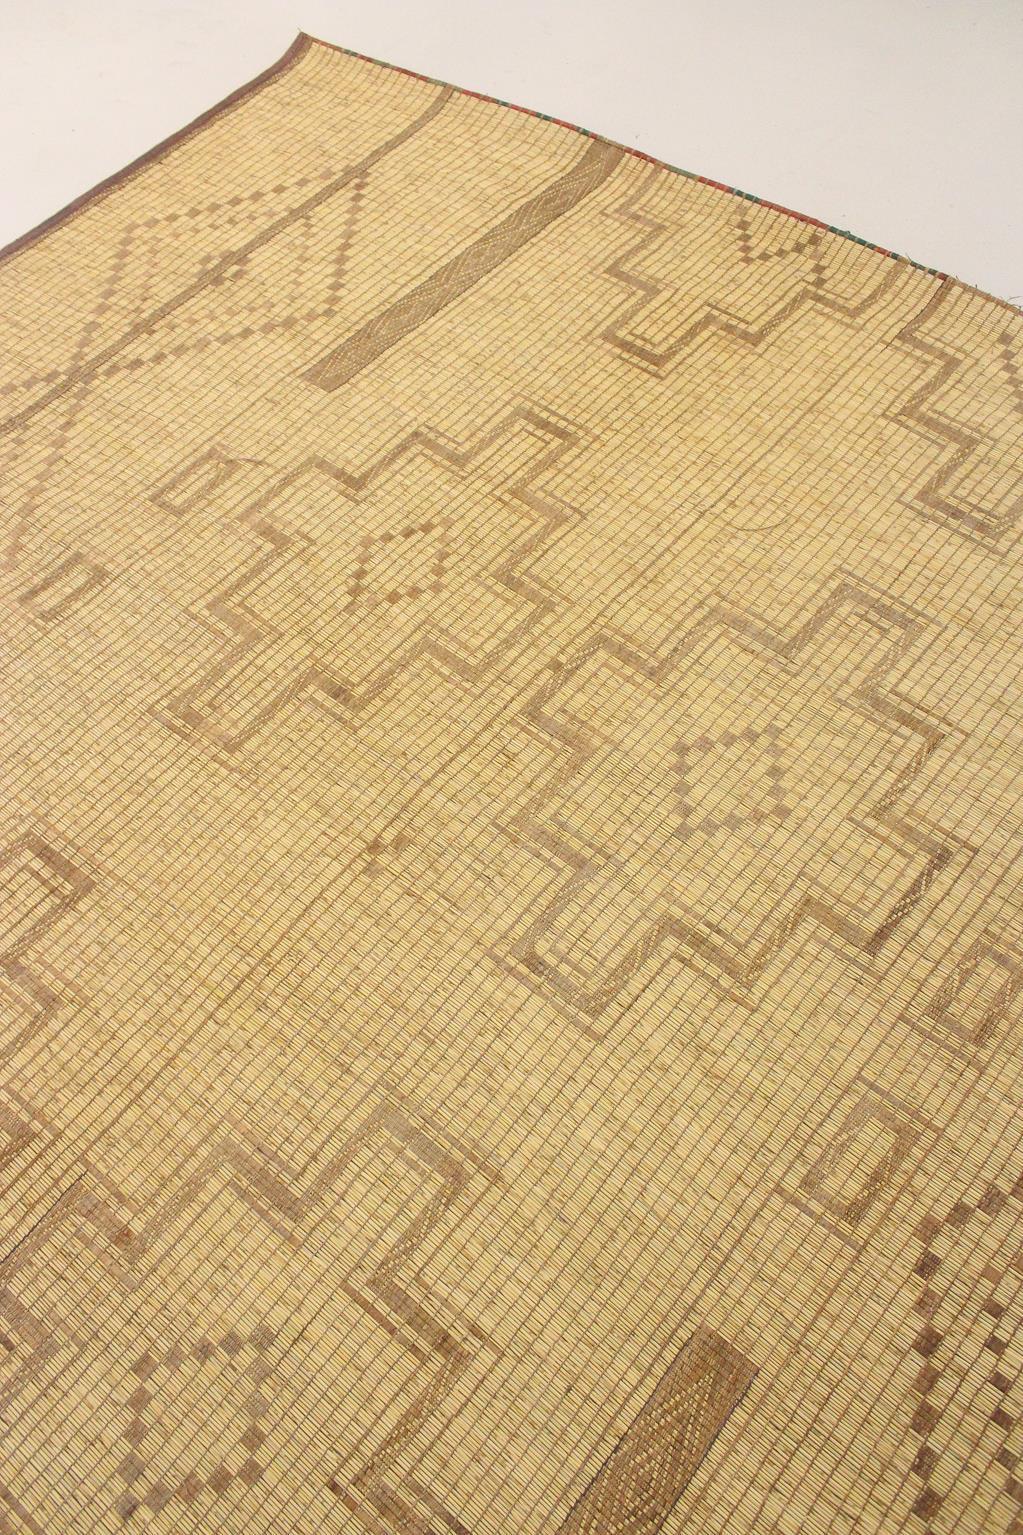 Leather Vintage African Mauritanian Tuareg mat in camel - 9.7x14feet / 297x425cm